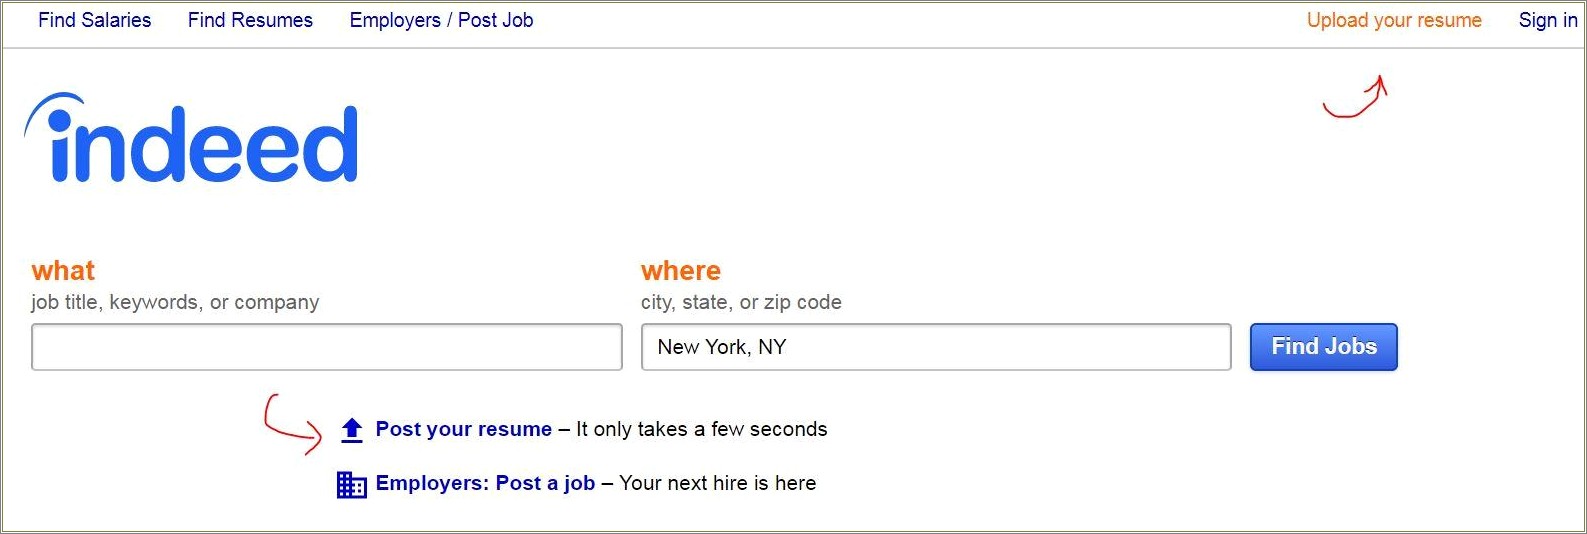 Best Websites To Post Resume For Jobs